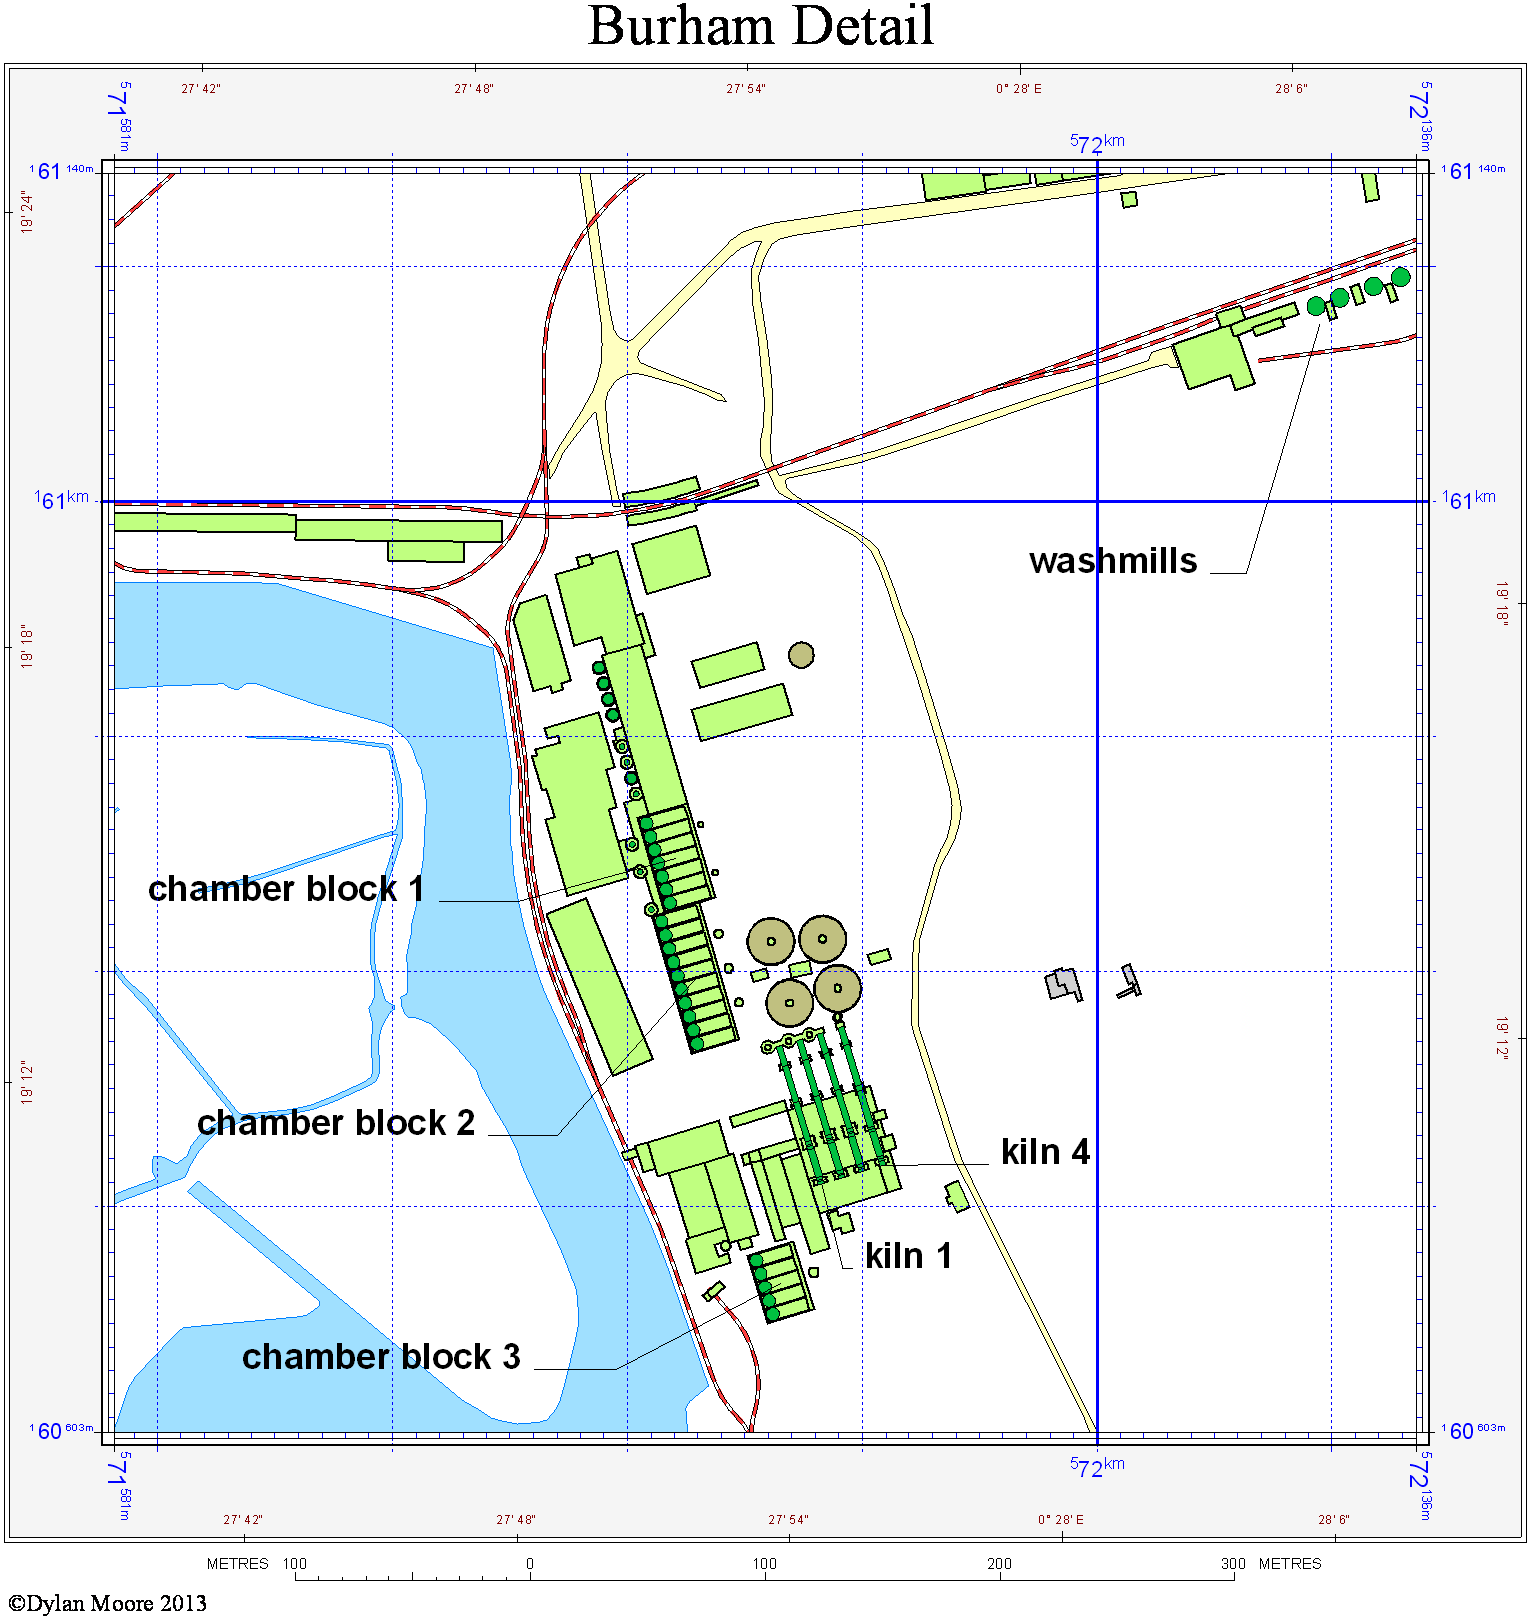 Burham cement plant layout map